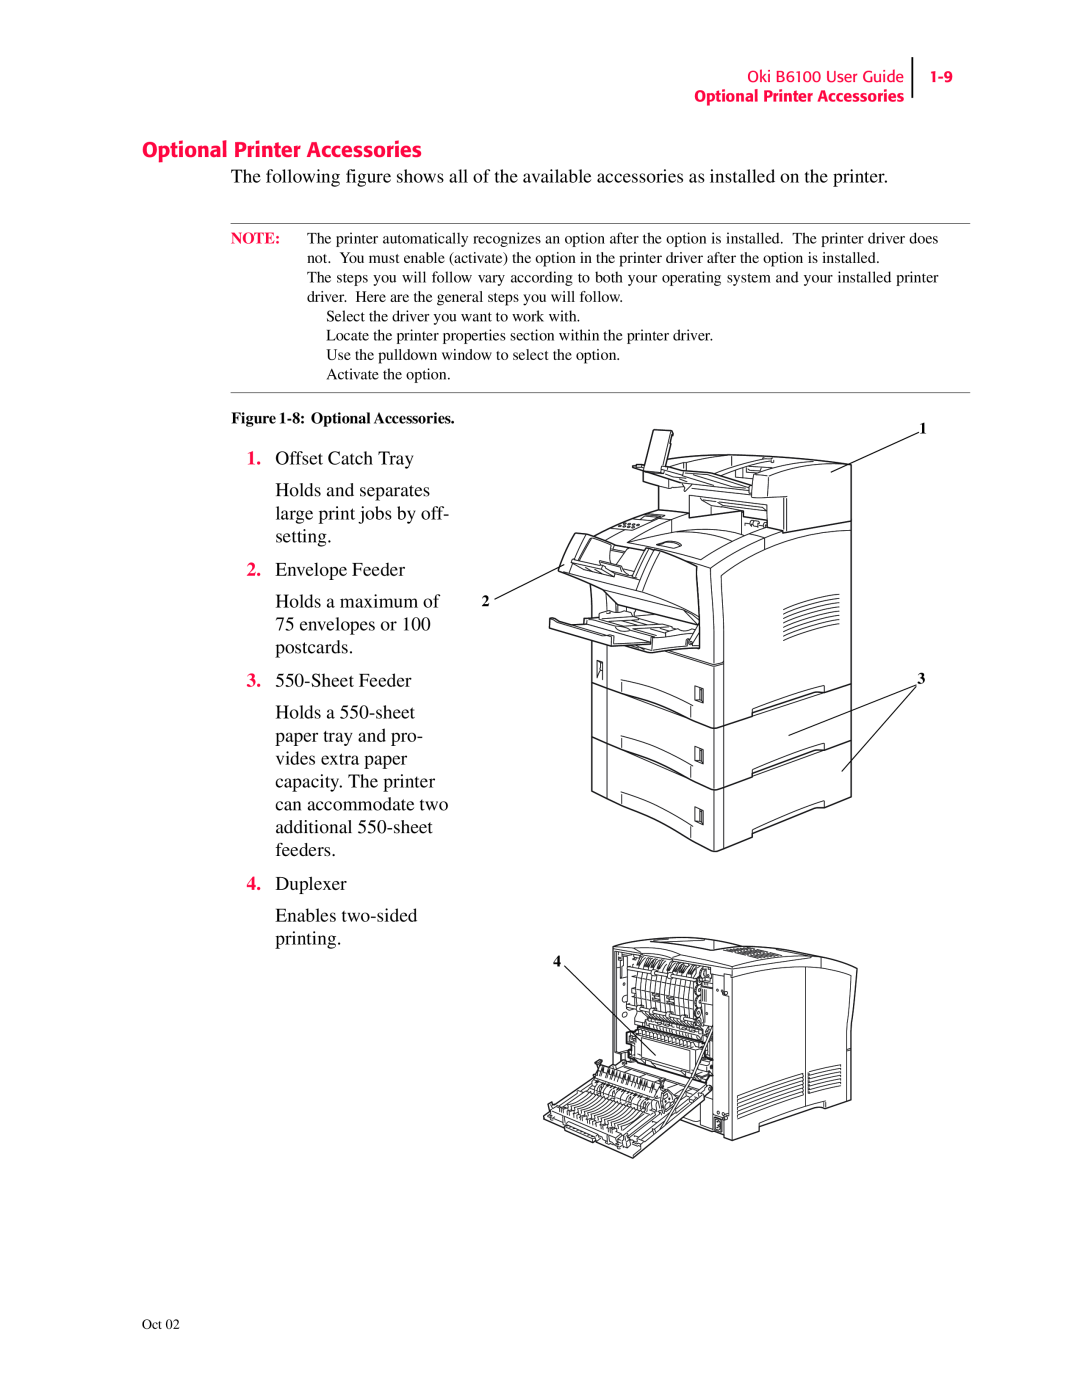 Oki 6100 manual Optional Printer Accessories 